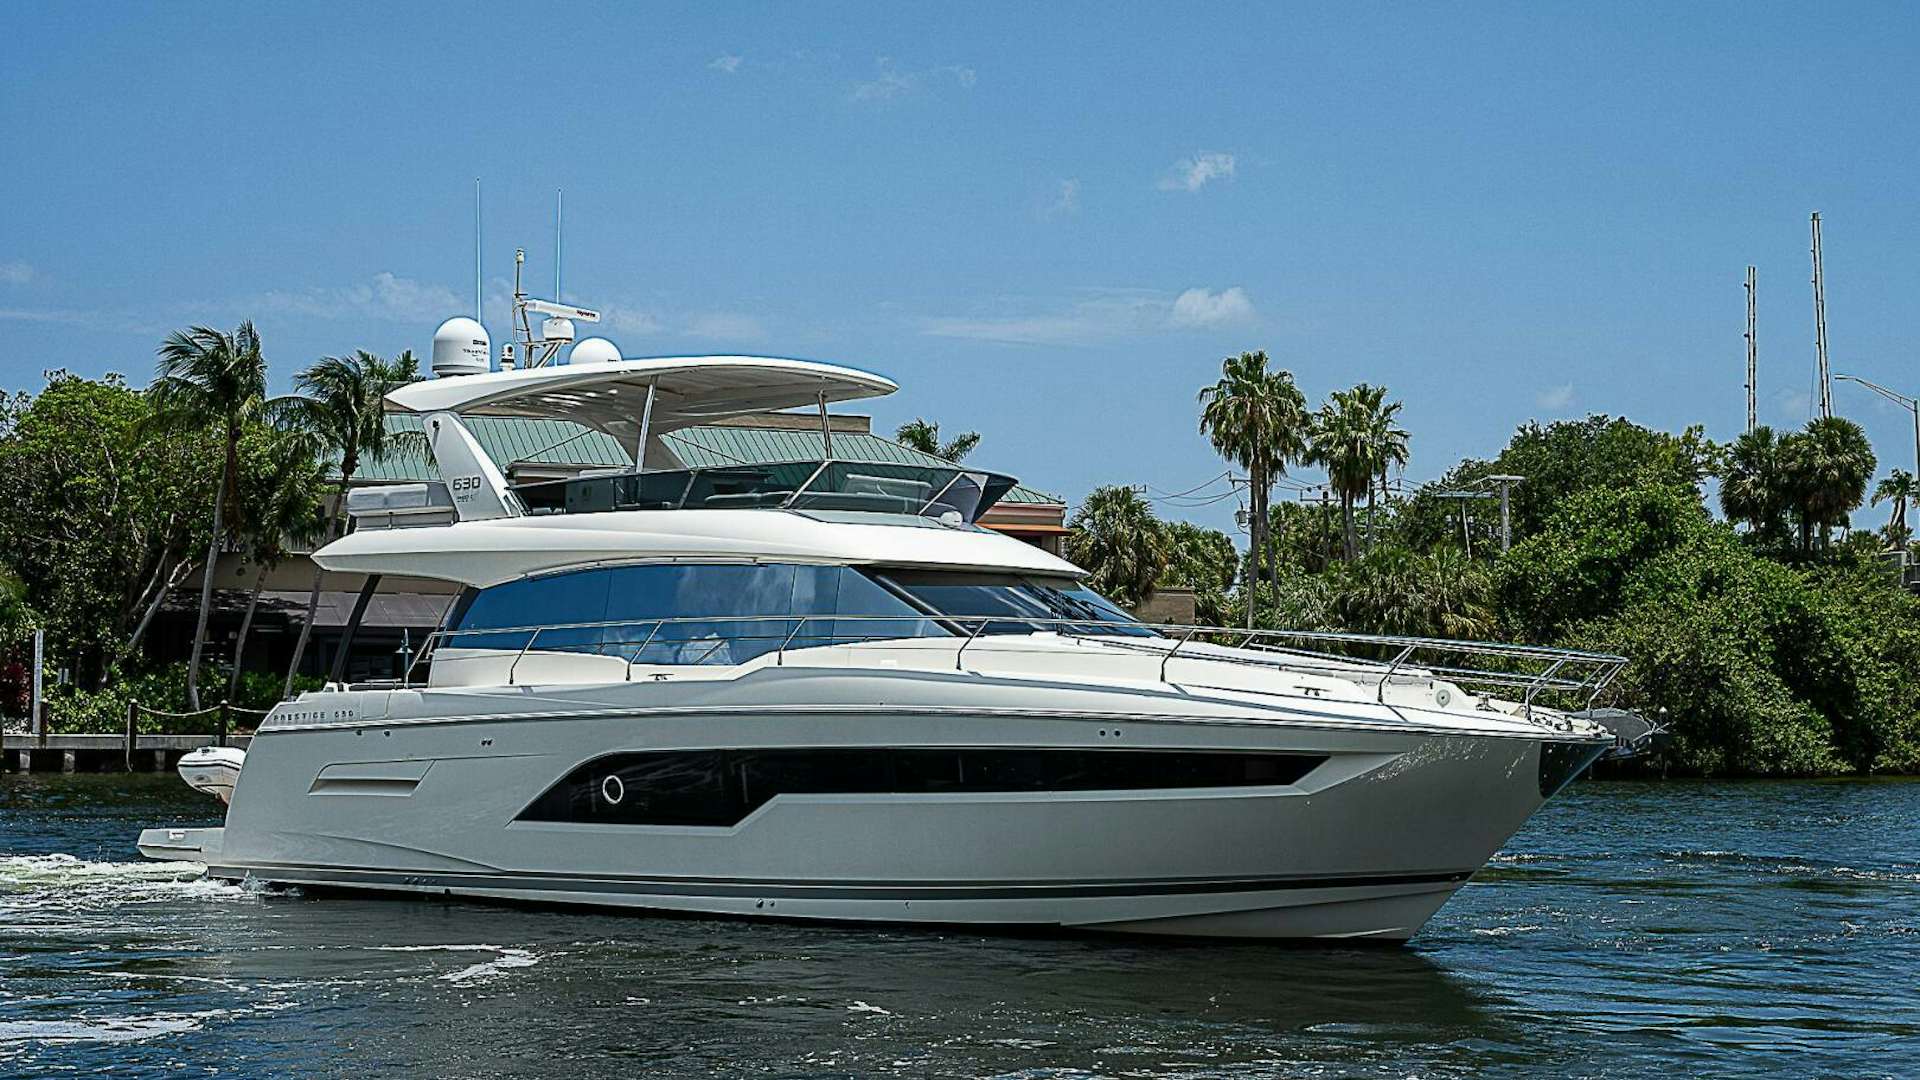 63' prestige 2020
Yacht for Sale